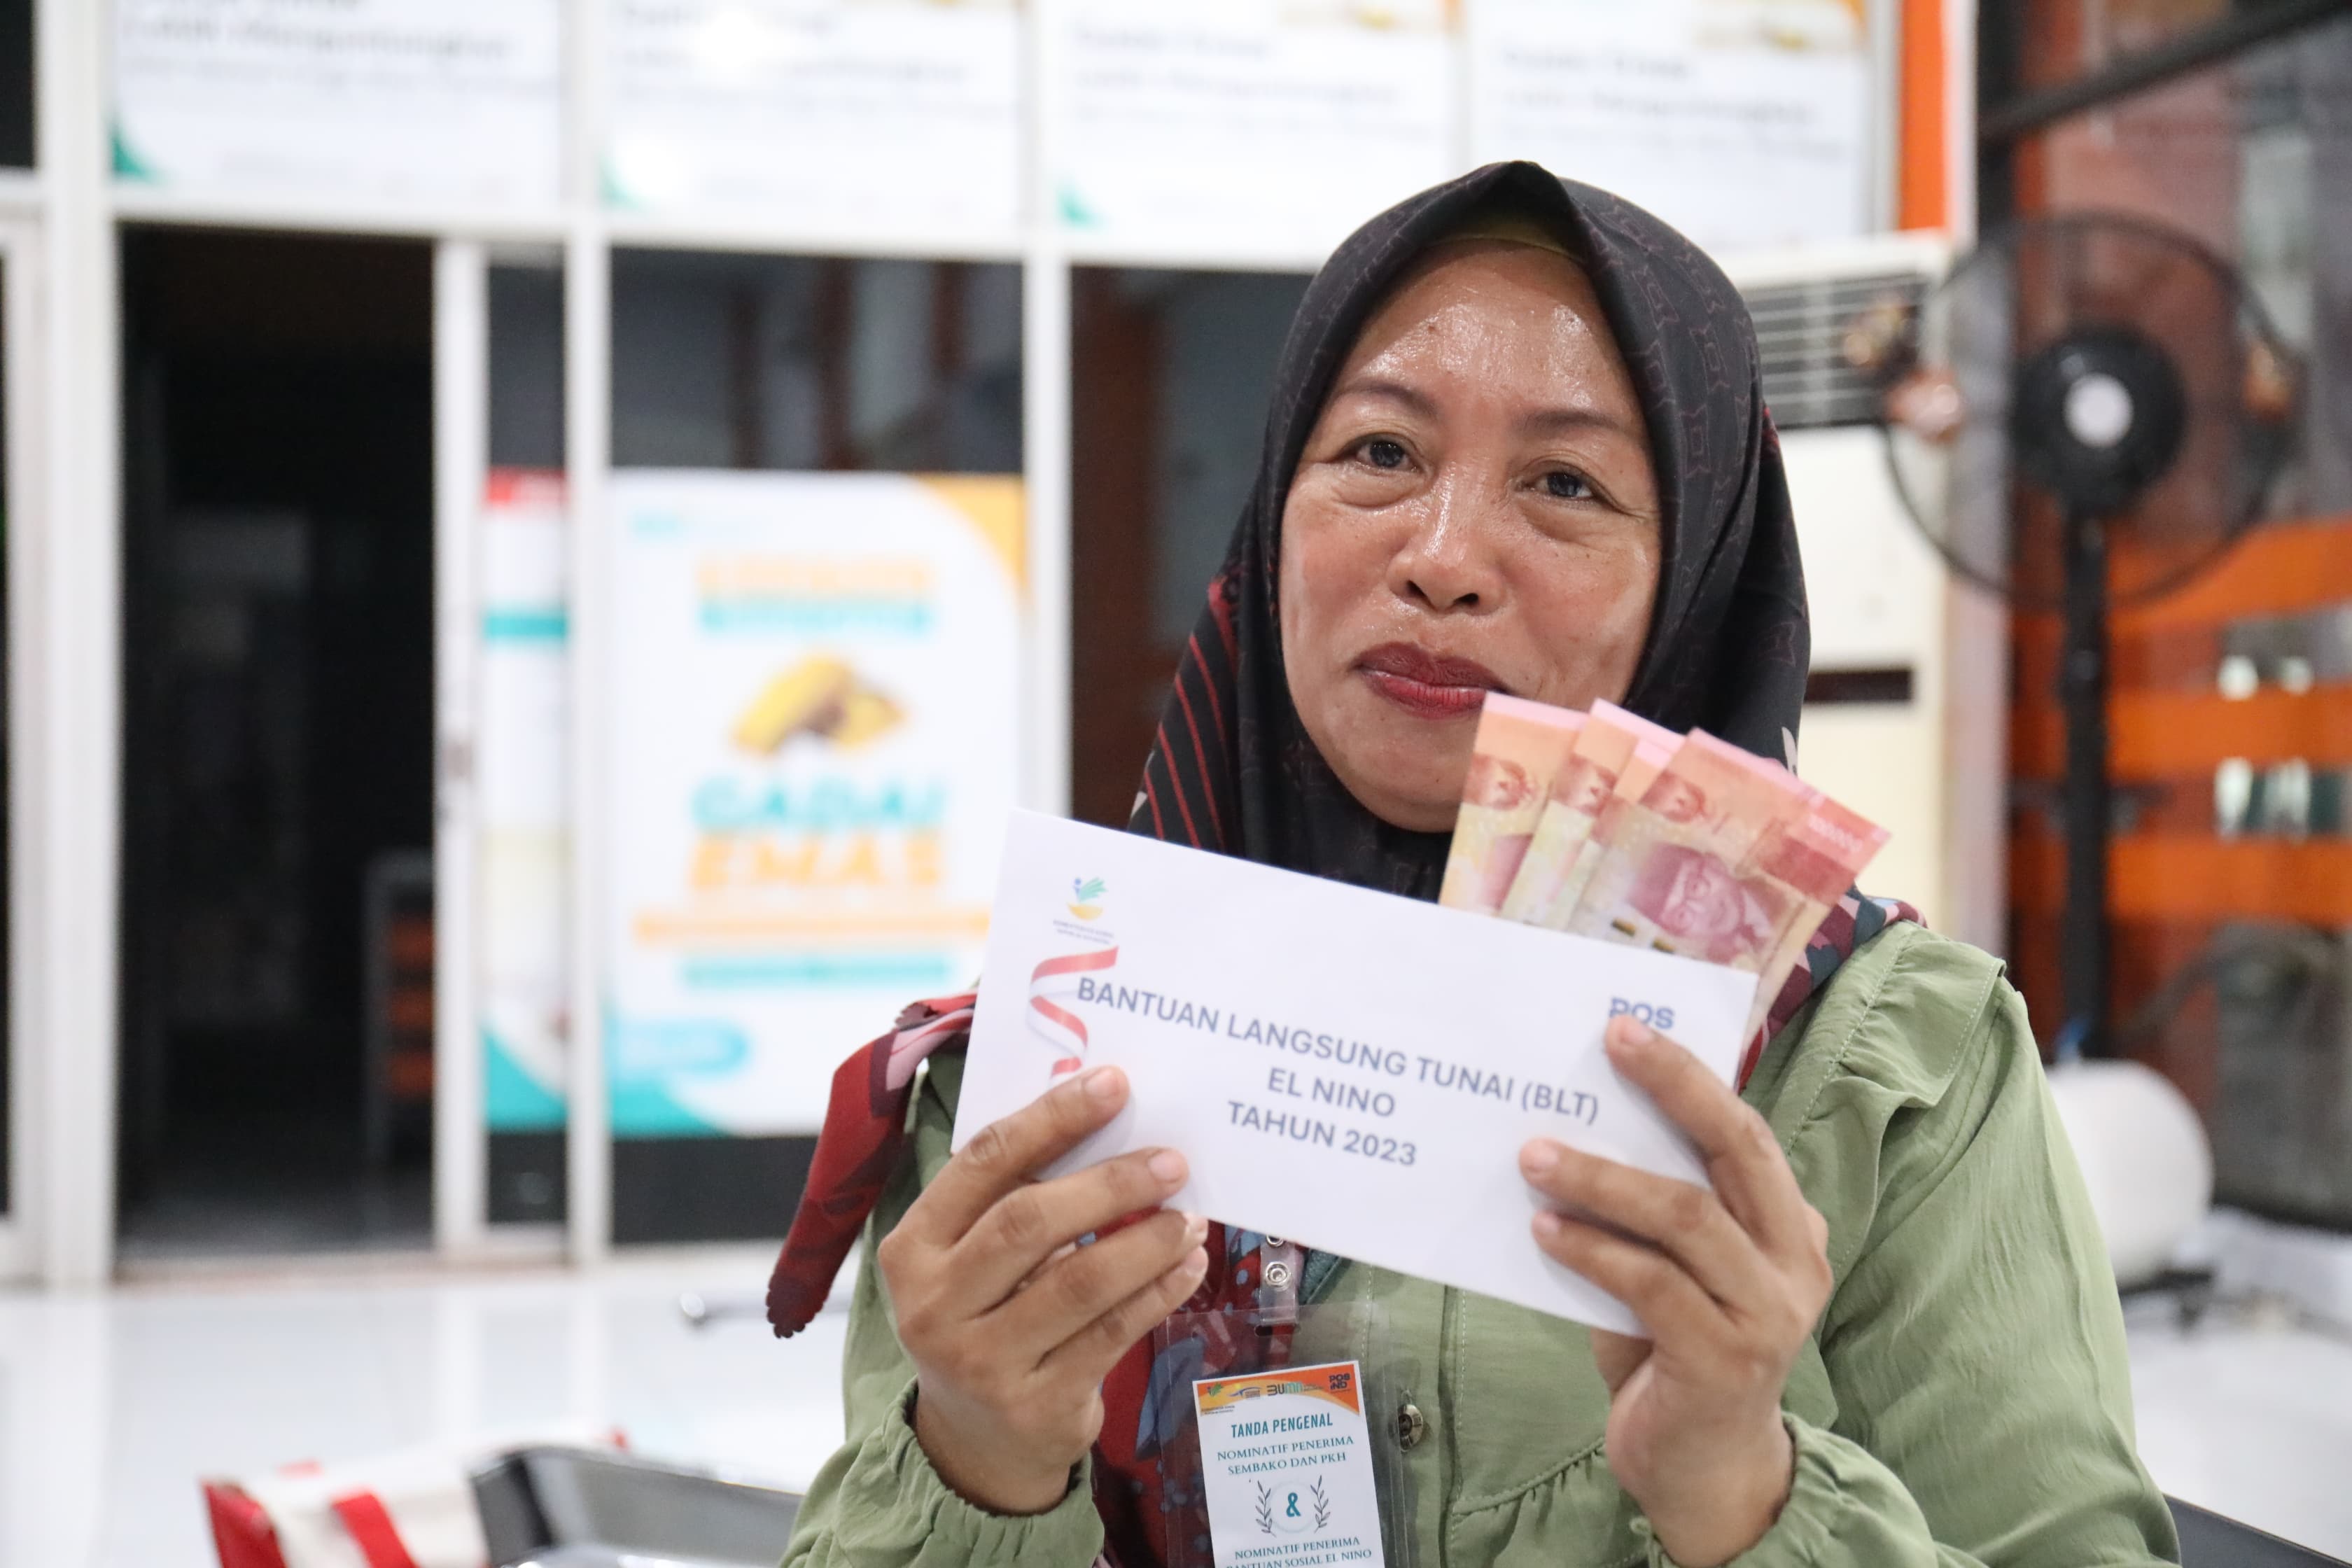 El Nino Cash Assistance Distribution at the Manado Post Office